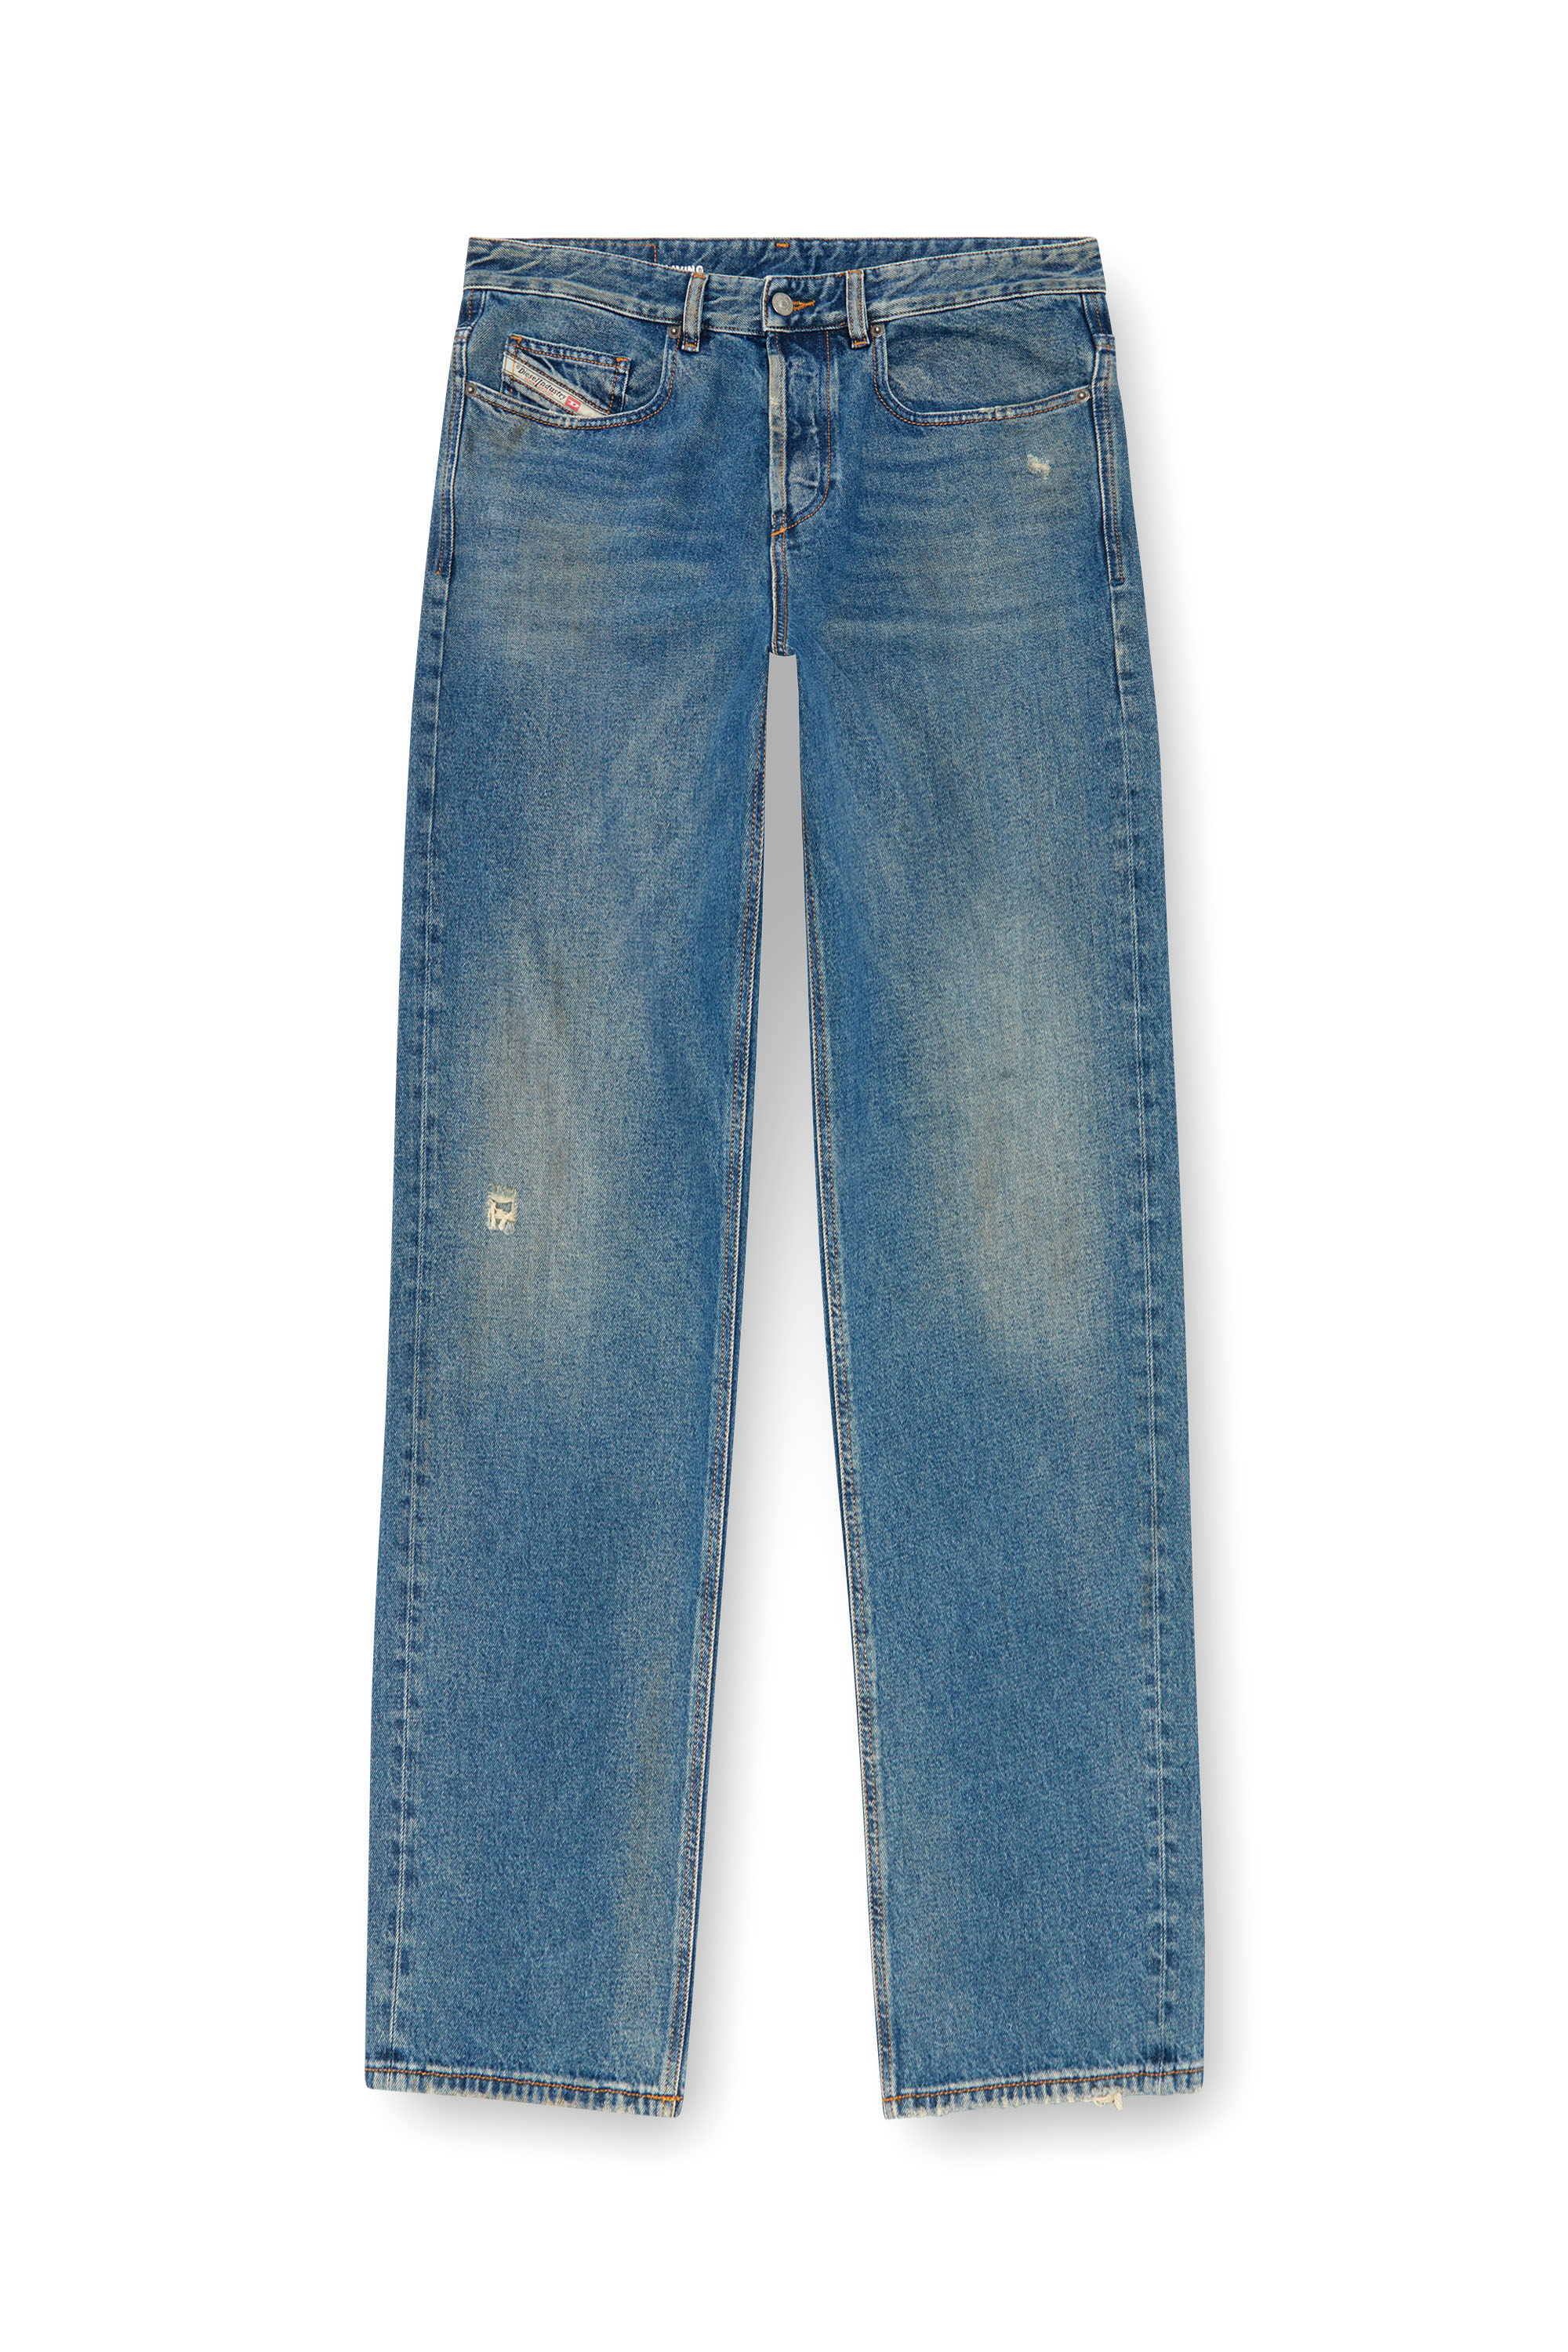 Diesel - Straight Jeans 2001 D-Macro 09J79, Hombre Straight Jeans - 2001 D-Macro in Azul marino - Image 5